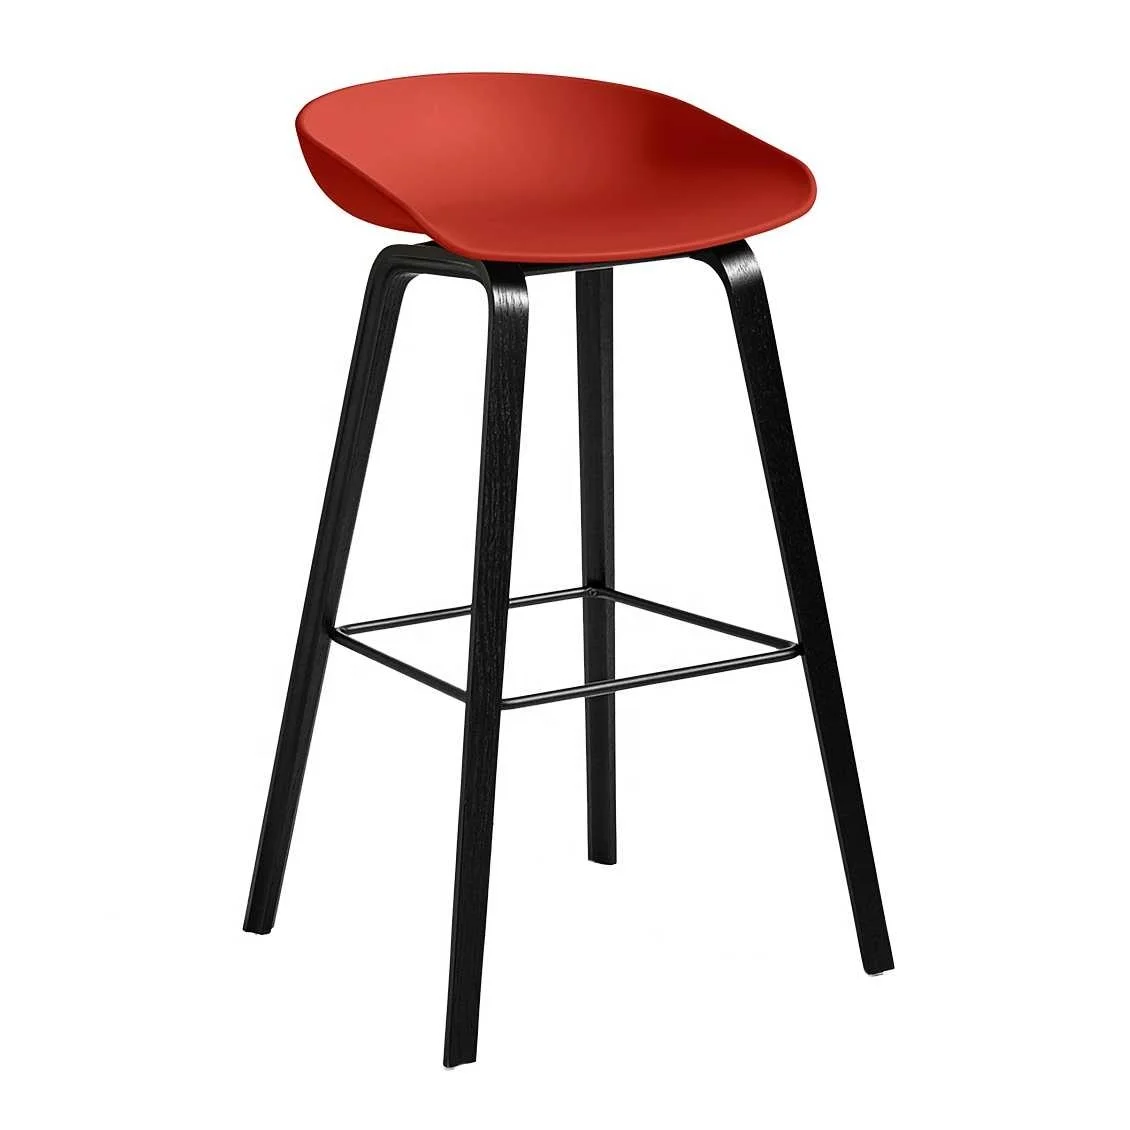 vintage industrial plastic seat metal legs chaises scandinave metal chairs bar stools